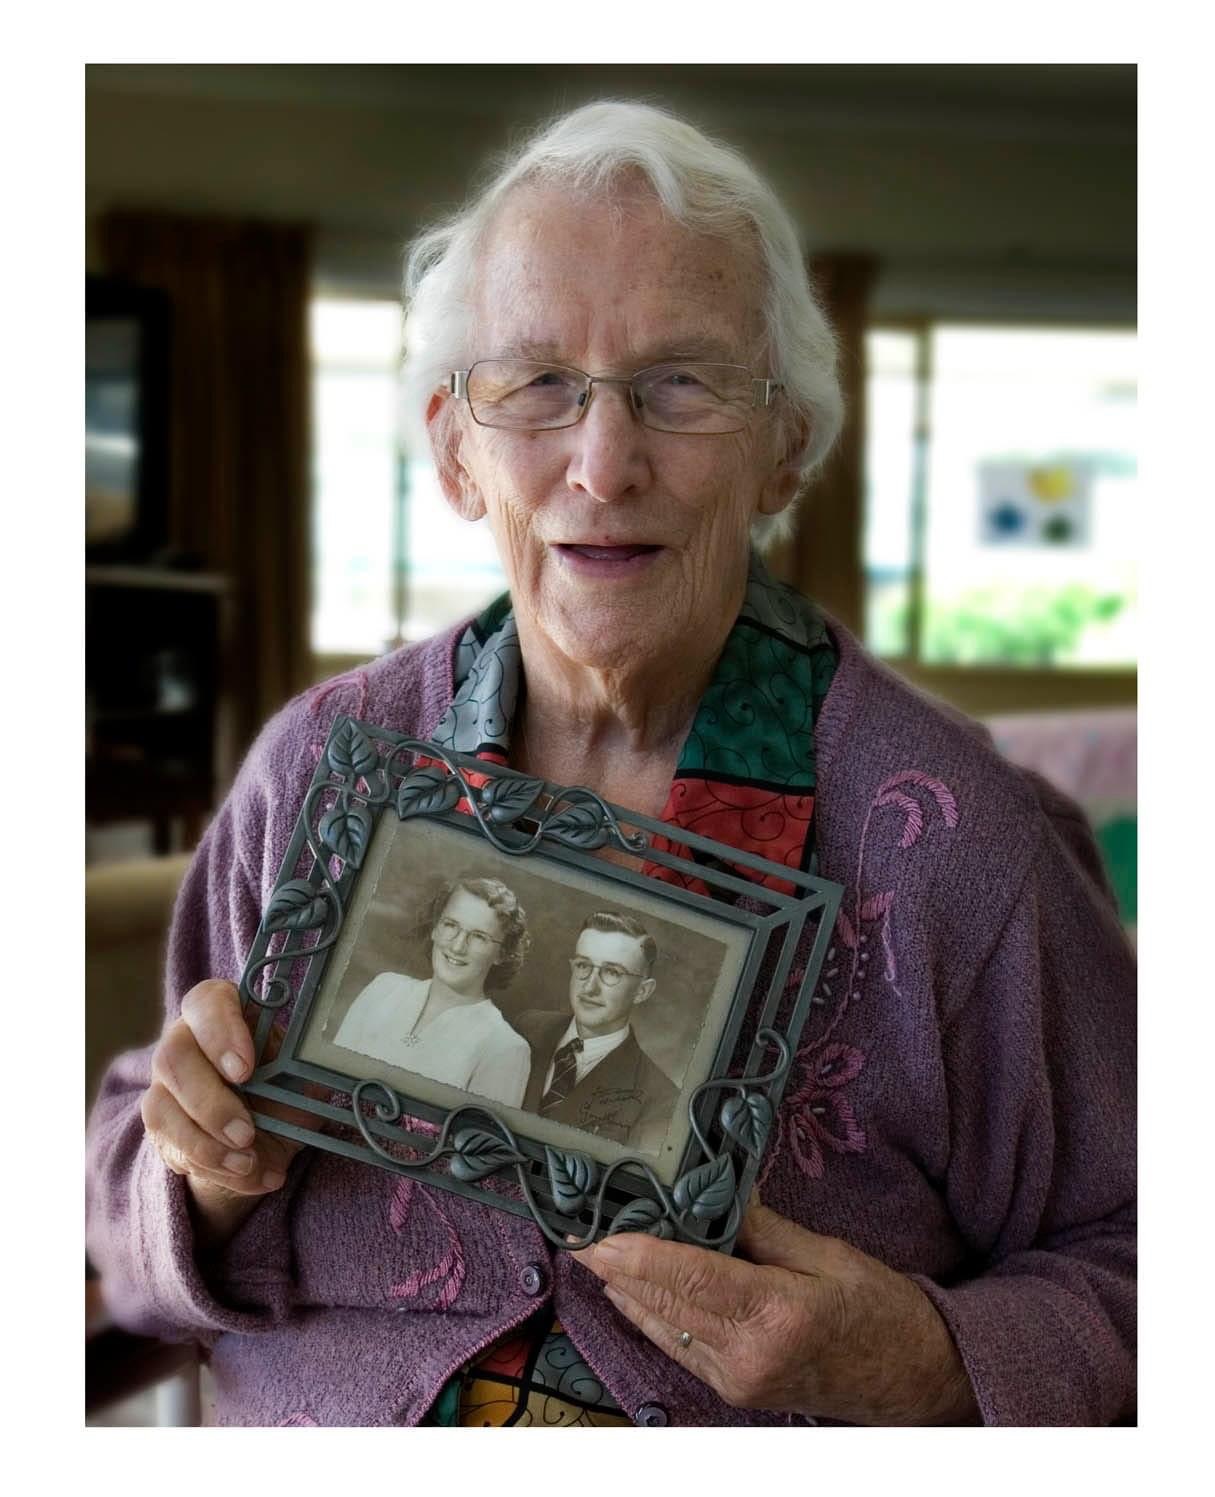 Bush family farewells matriarch Pat, 'keeper of memories'